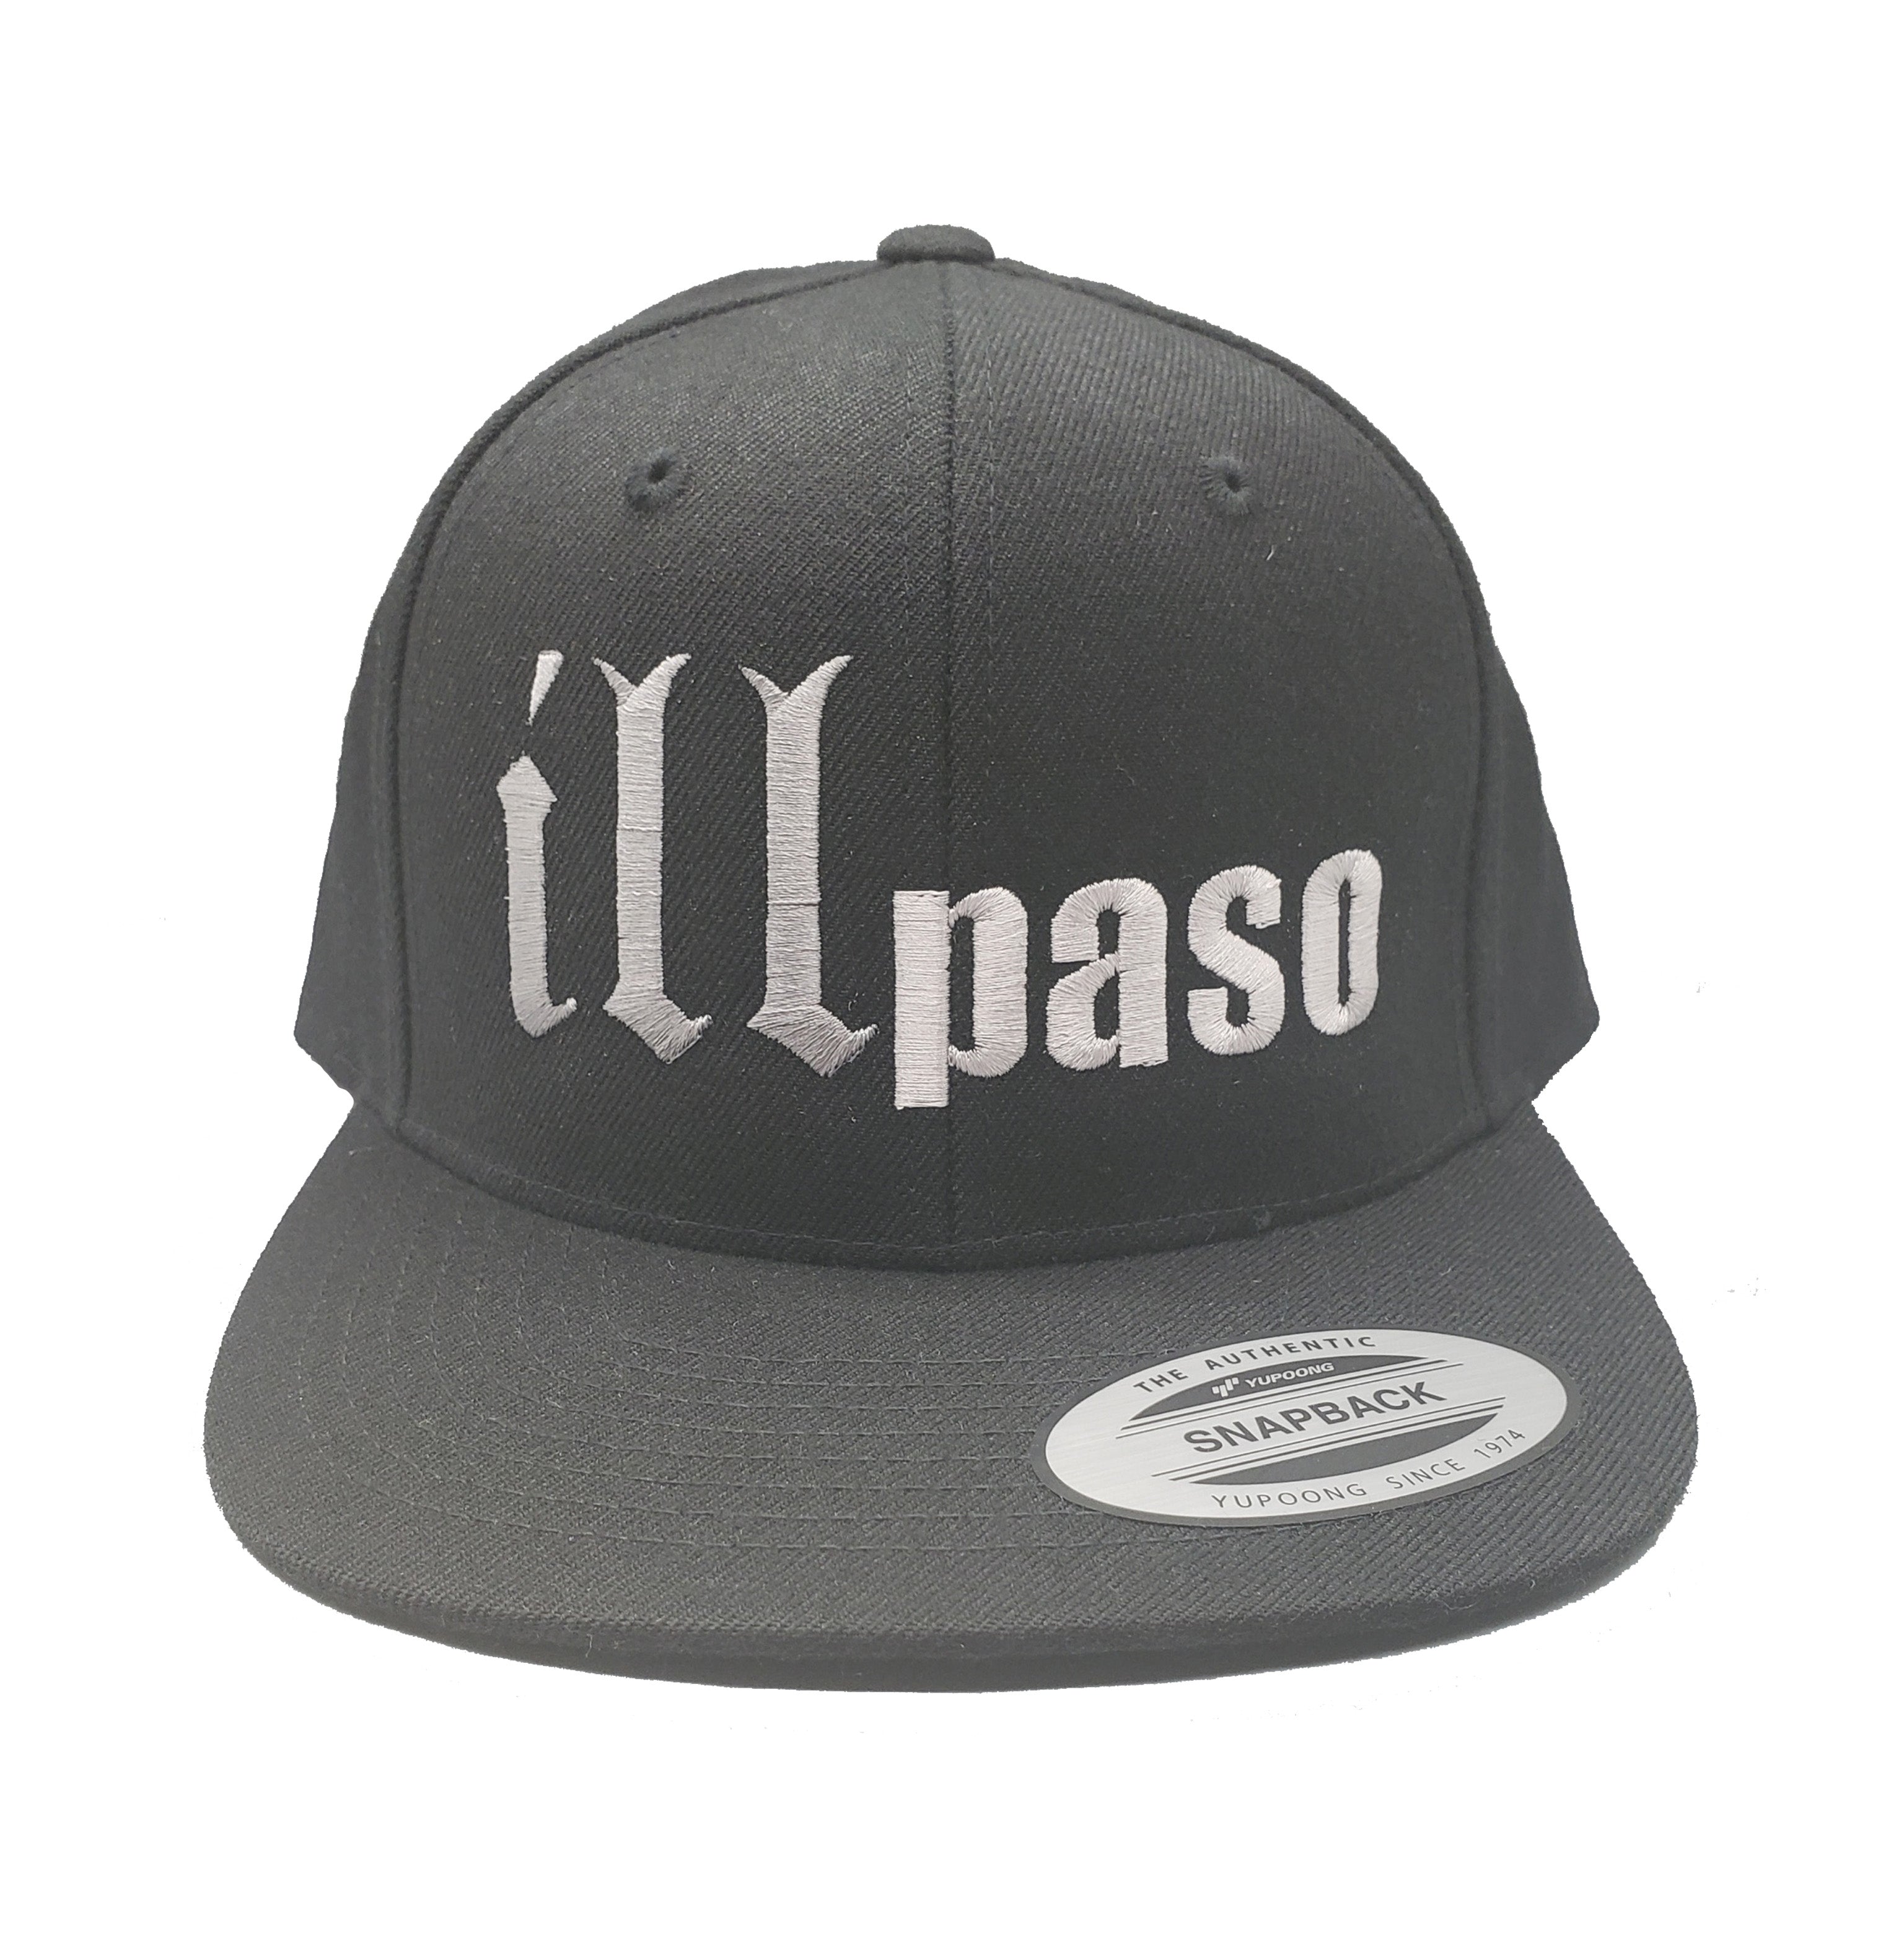 "illmatic Tribute" Snapback Hat (Black w/ Grey Stitching) by illpaso